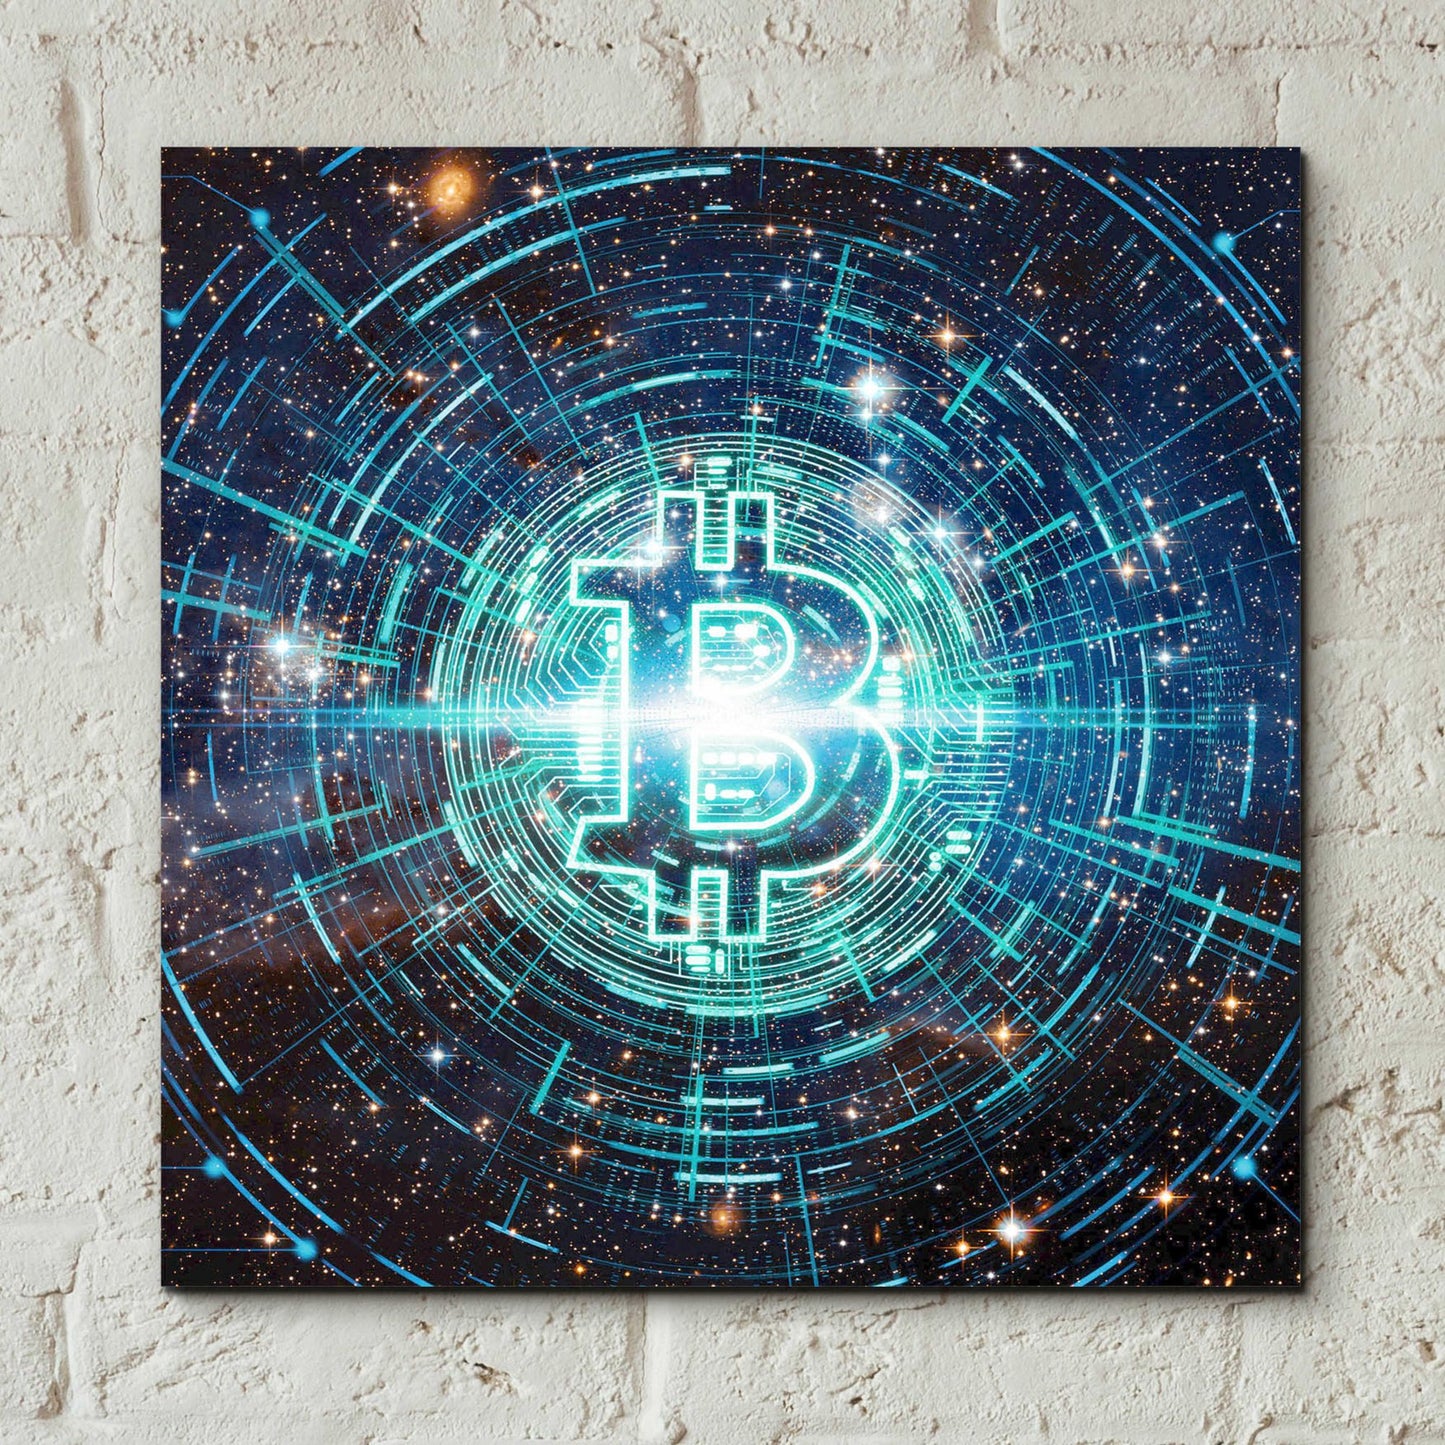 Epic Art 'Cyber Bitcoin', Acrylic Glass Wall Art,12x12